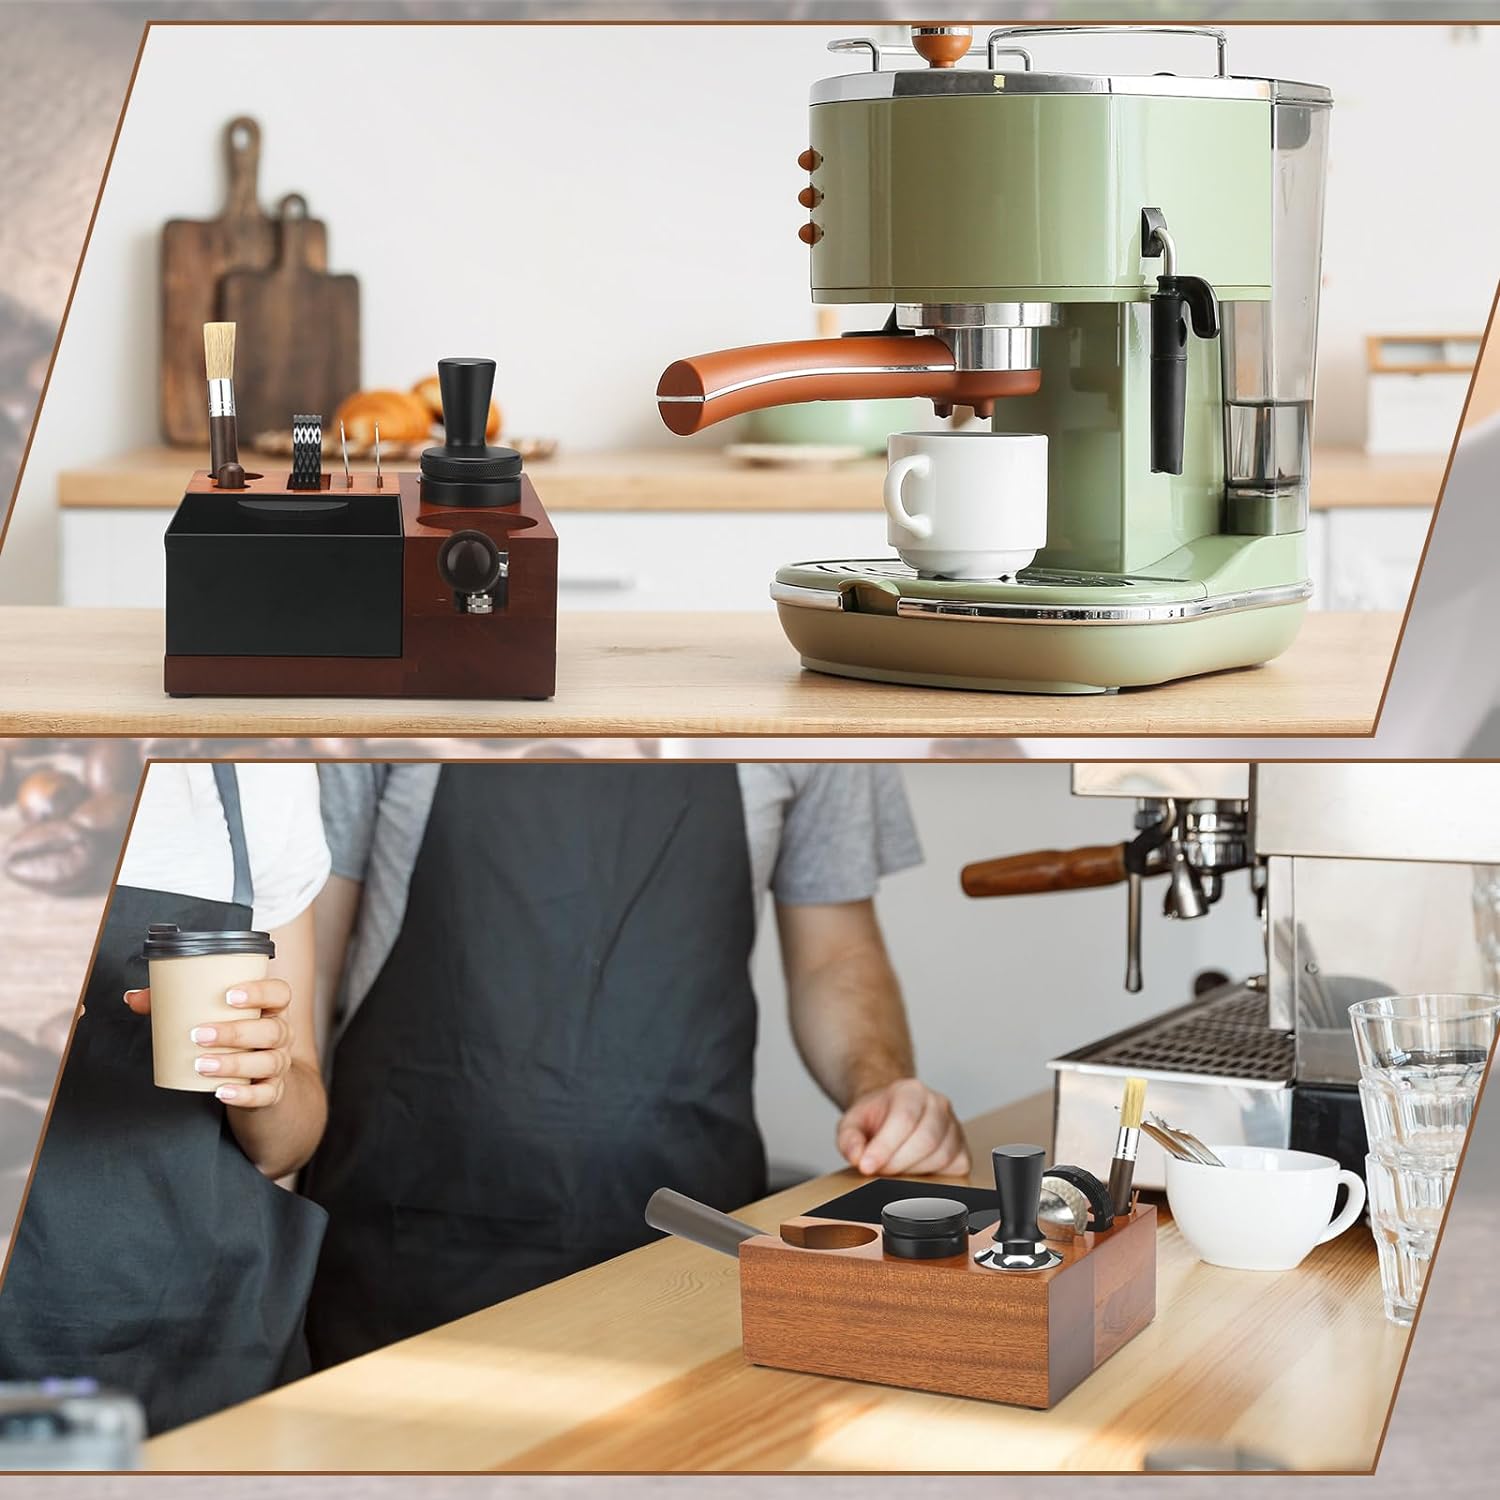 Wenqik 8 In One Espresso Knock Box Espresso Accessories Coffee Organizer, Include Wooden Tamping Station Espresso Tamper, Distributor, Puck Screen Accessories (58 mm)